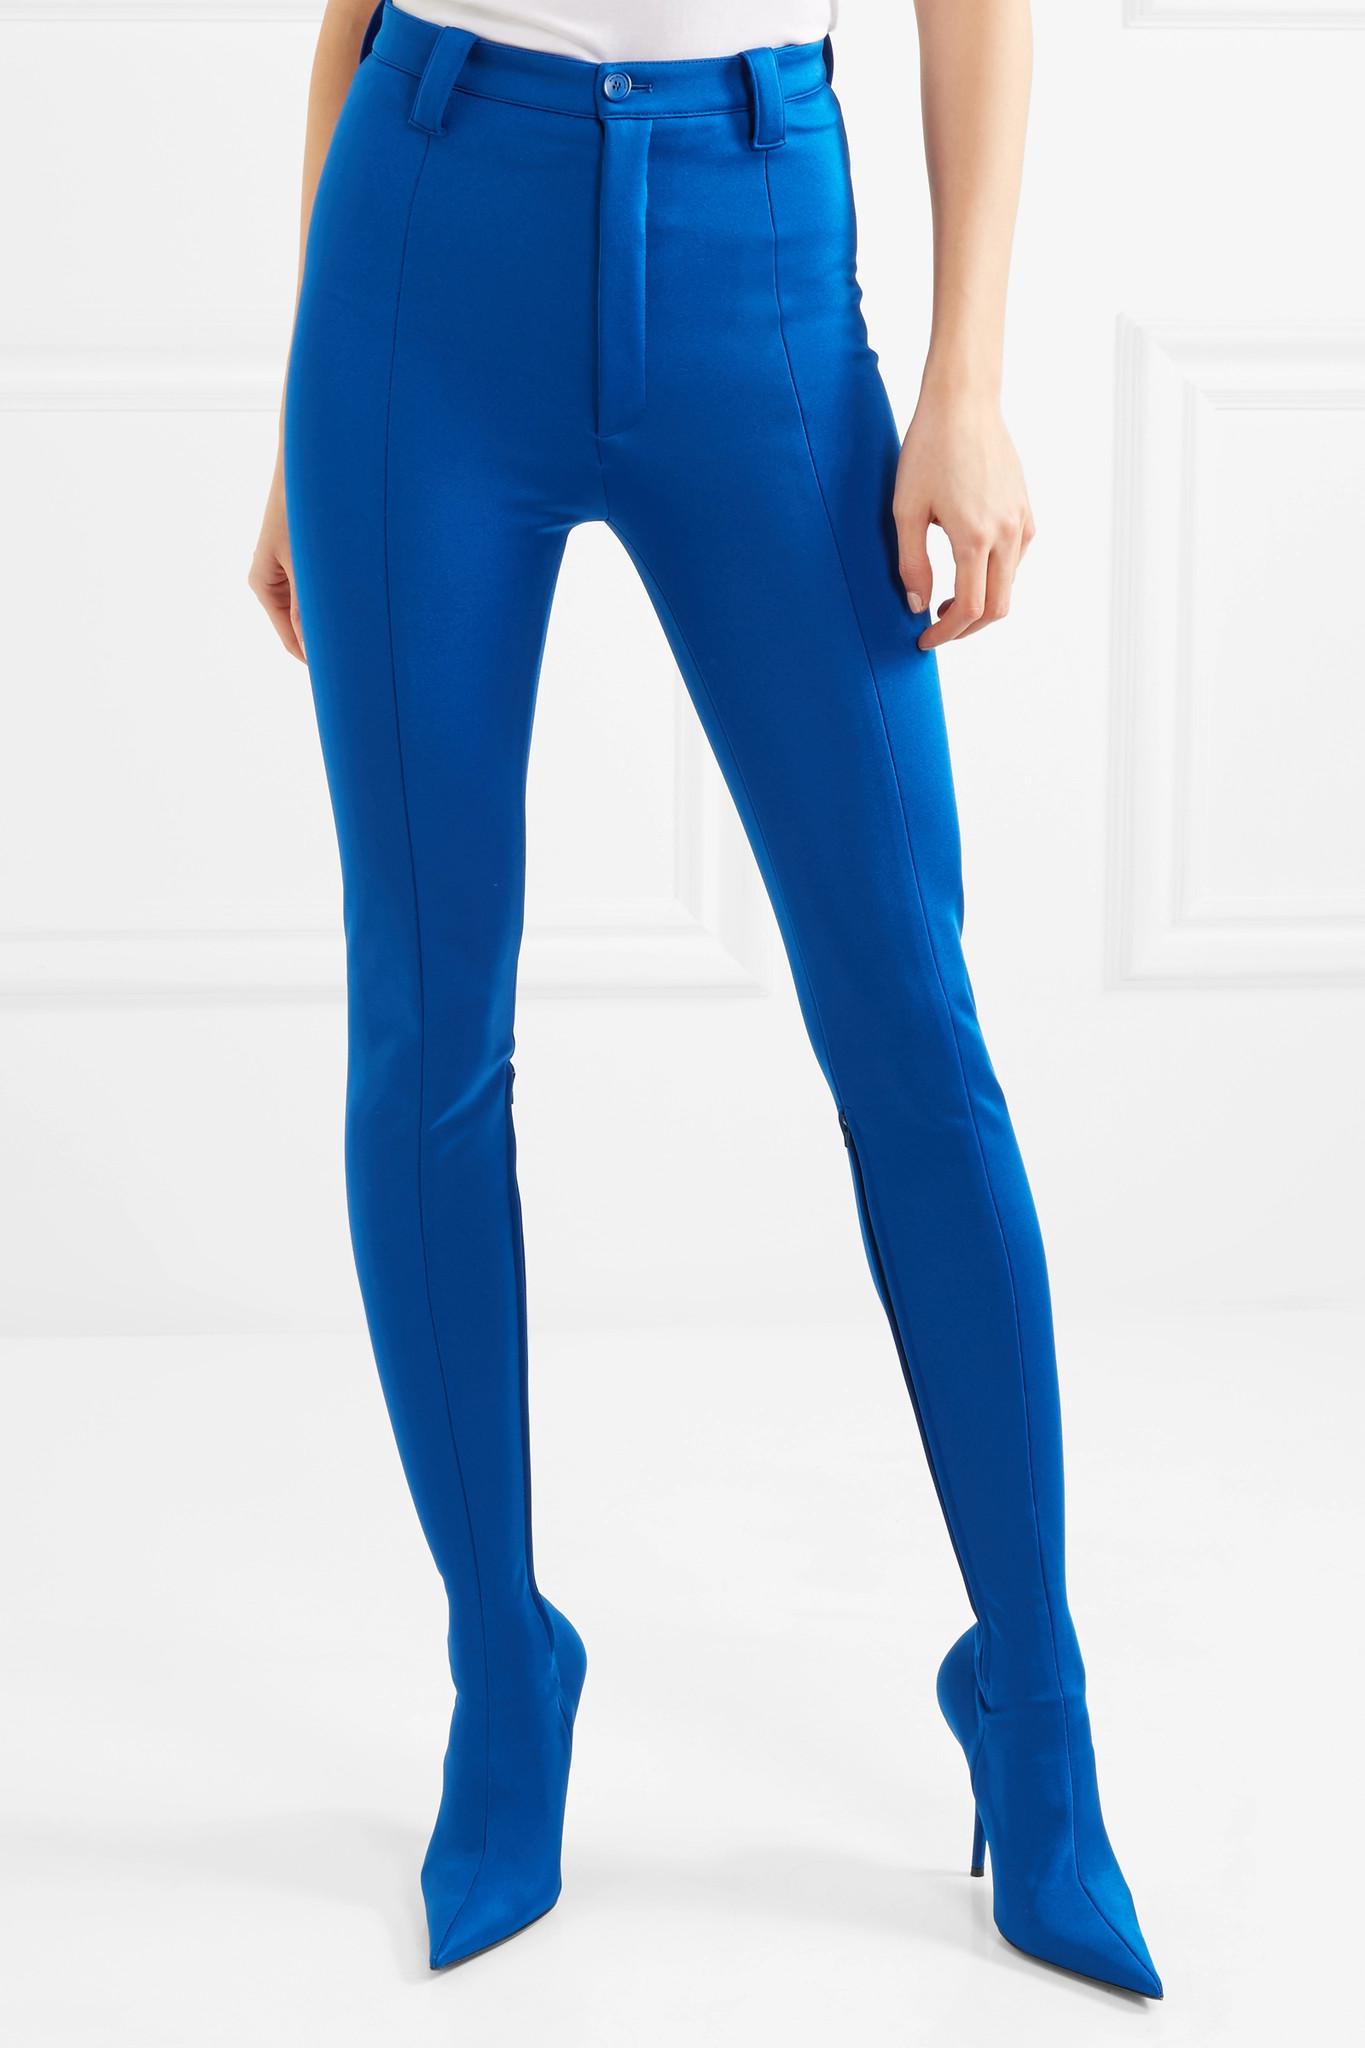 Balenciaga Pantashoe Spandex Skinny Pants in Blue | Lyst